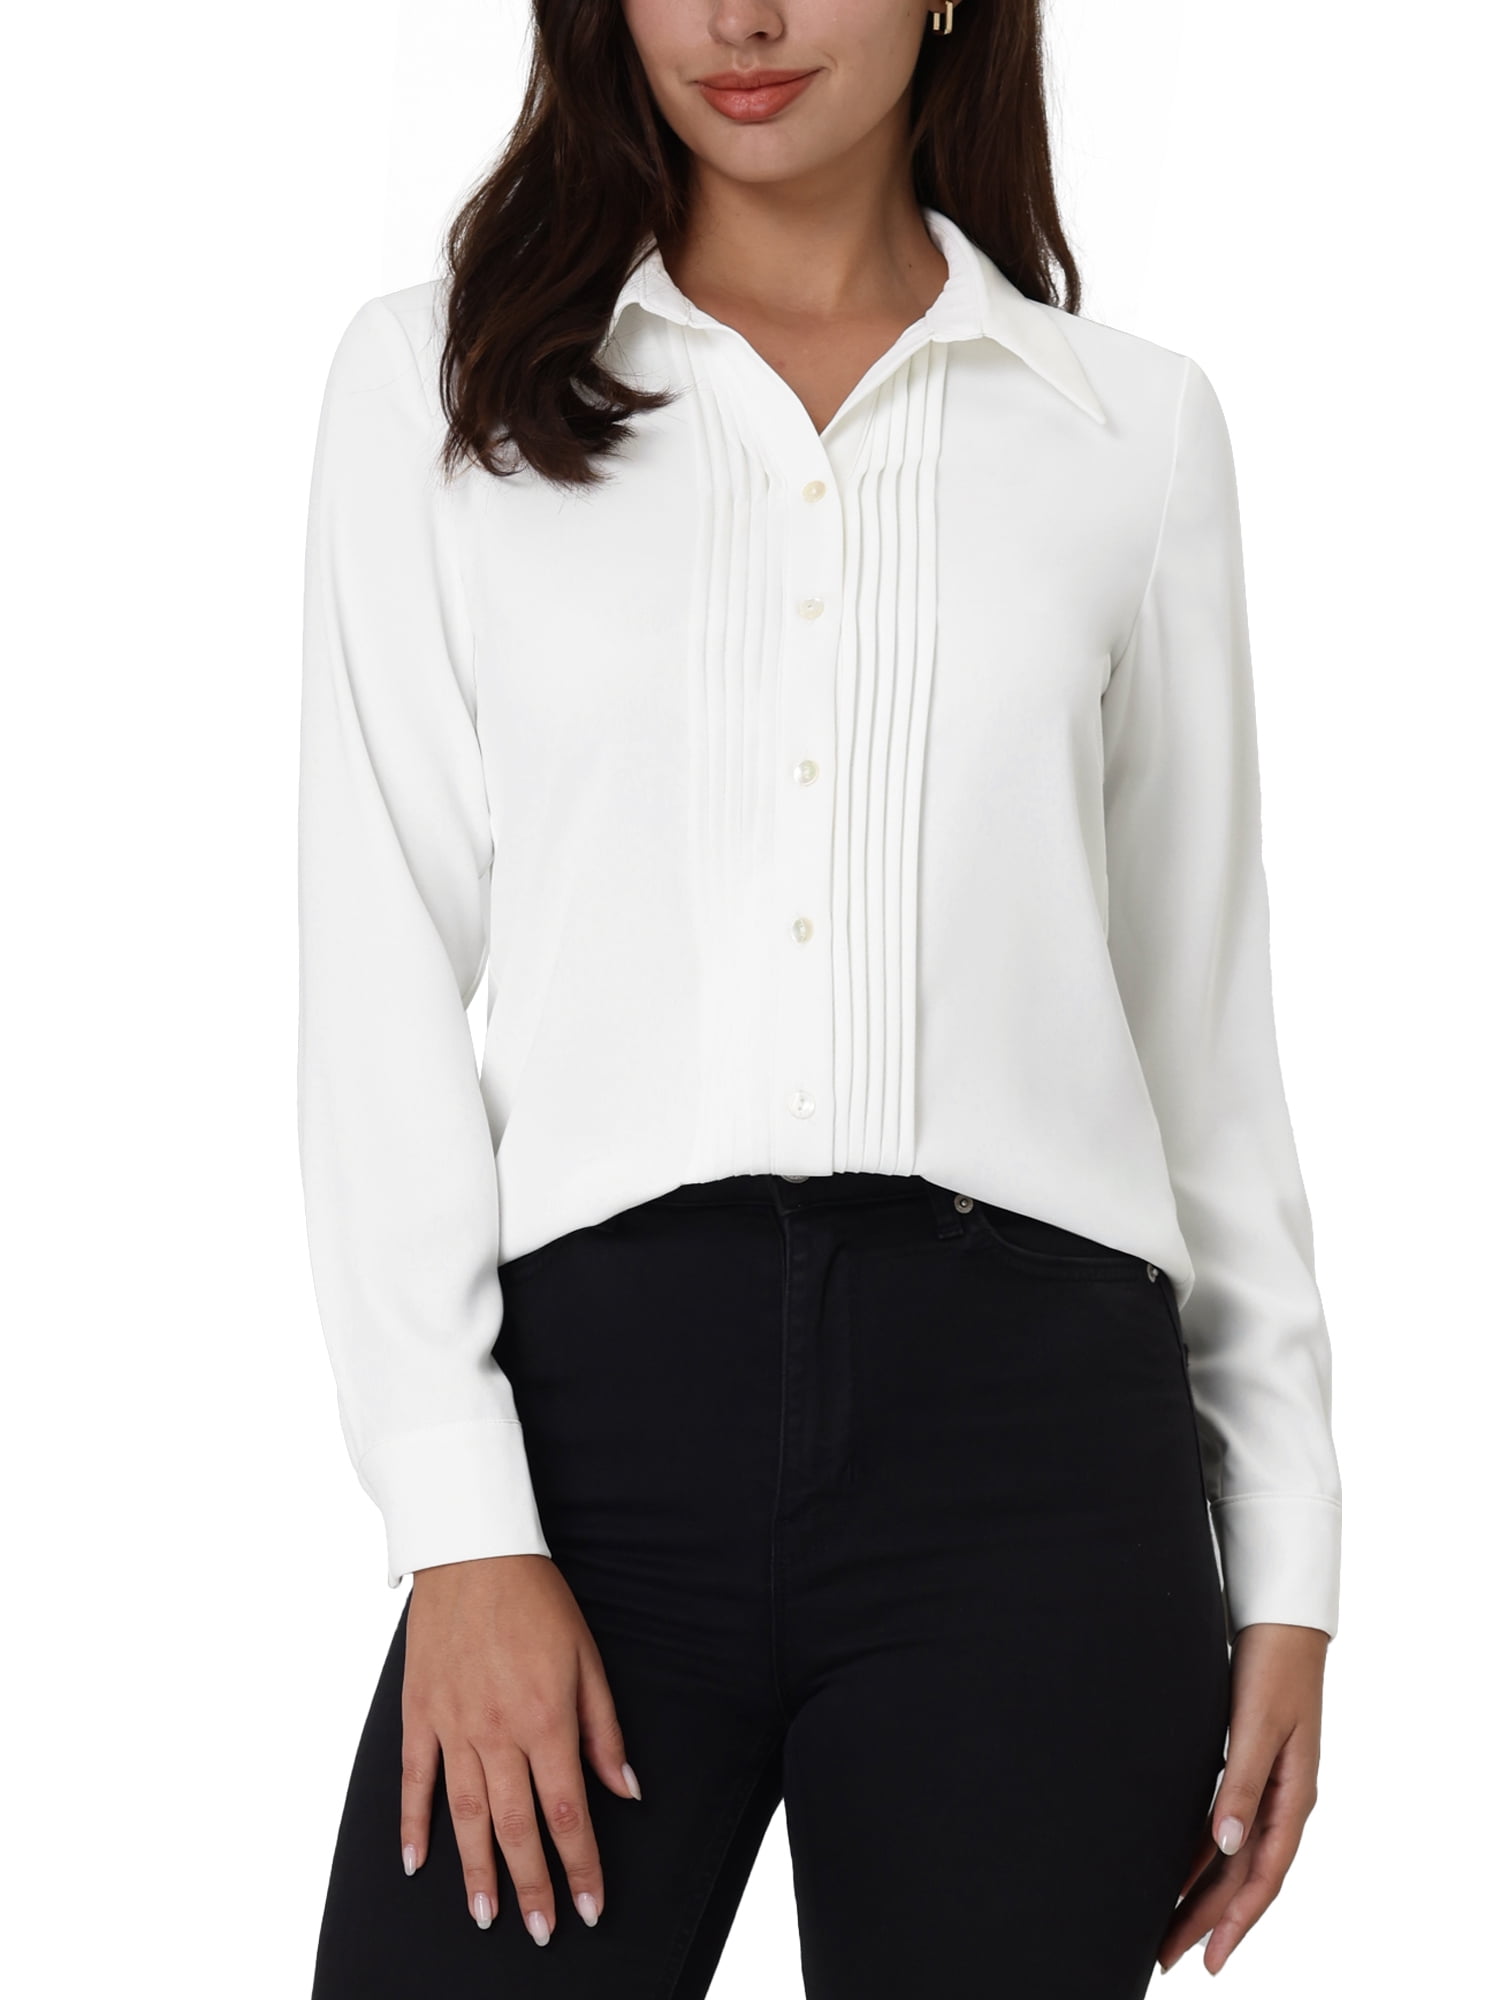 Hobemty Women's Work Shirt Long Sleeve Pleated Button Down Blouse ...